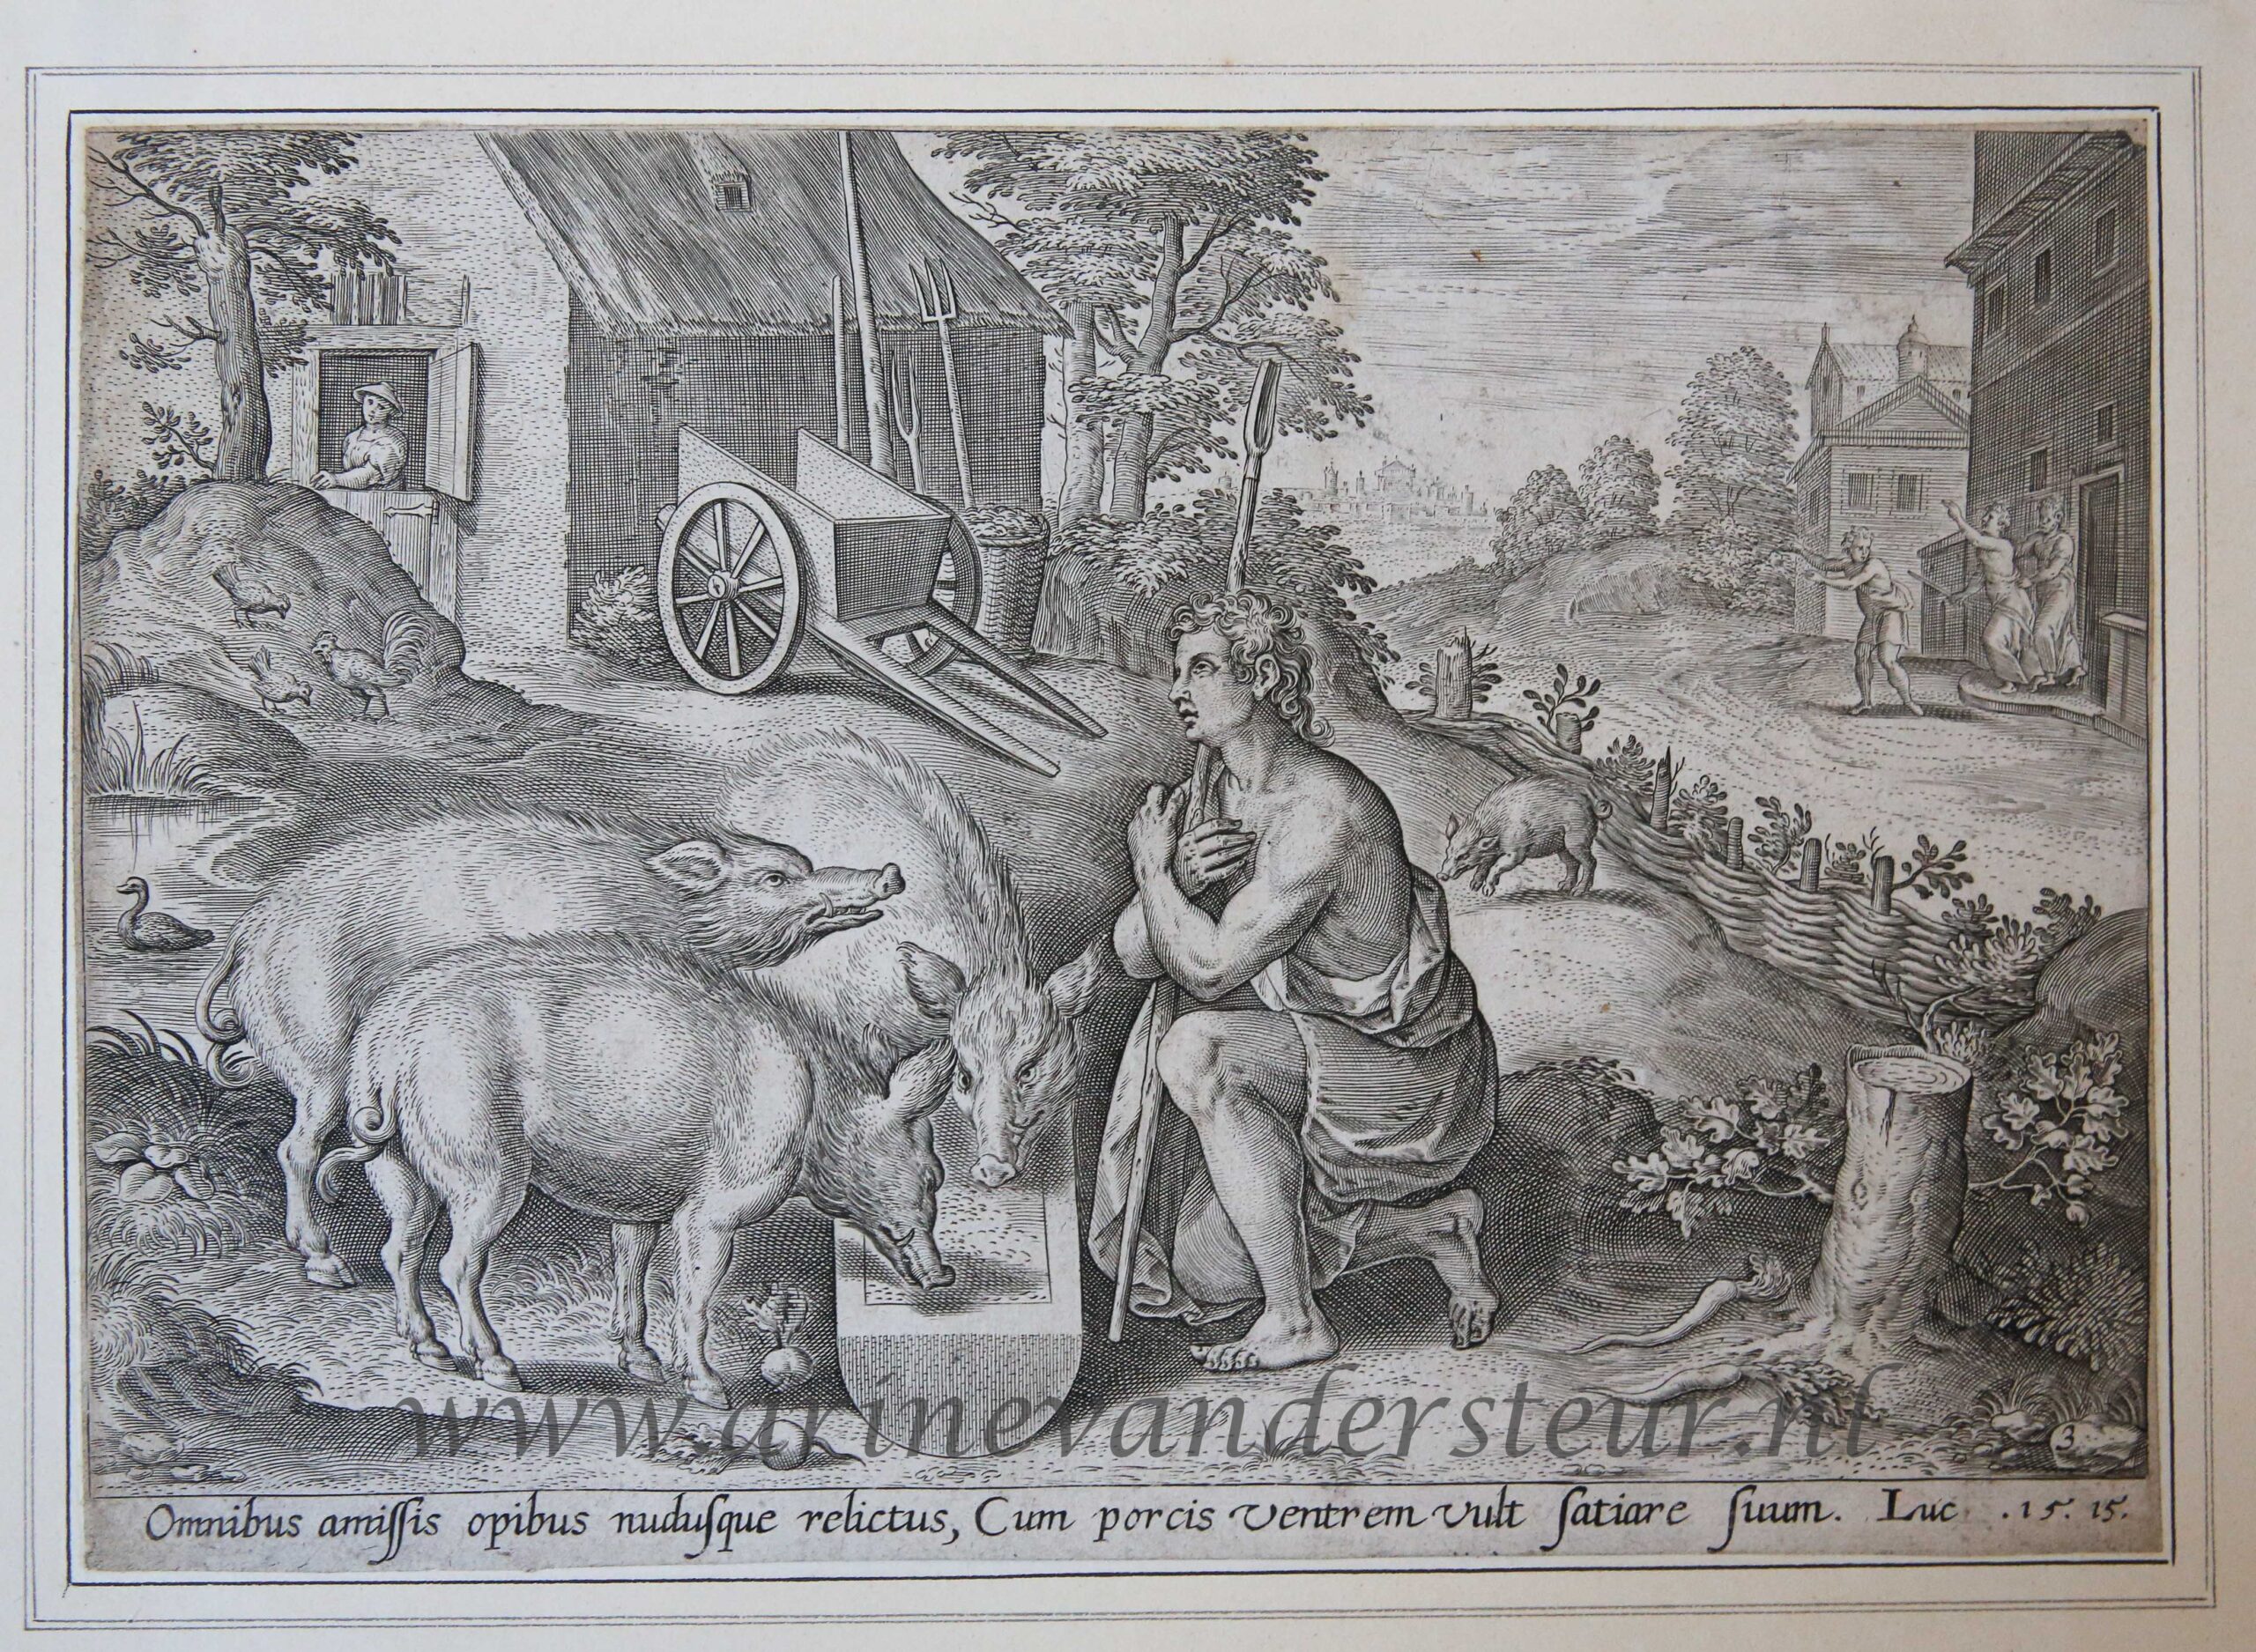 [Antique print, engraving, 1643] The Prodigal Son as a swine herd /De verloren zoon als varkenshoeder [Set of 4 plates: The parable of the Prodigal Son], published 1643, 1 p.